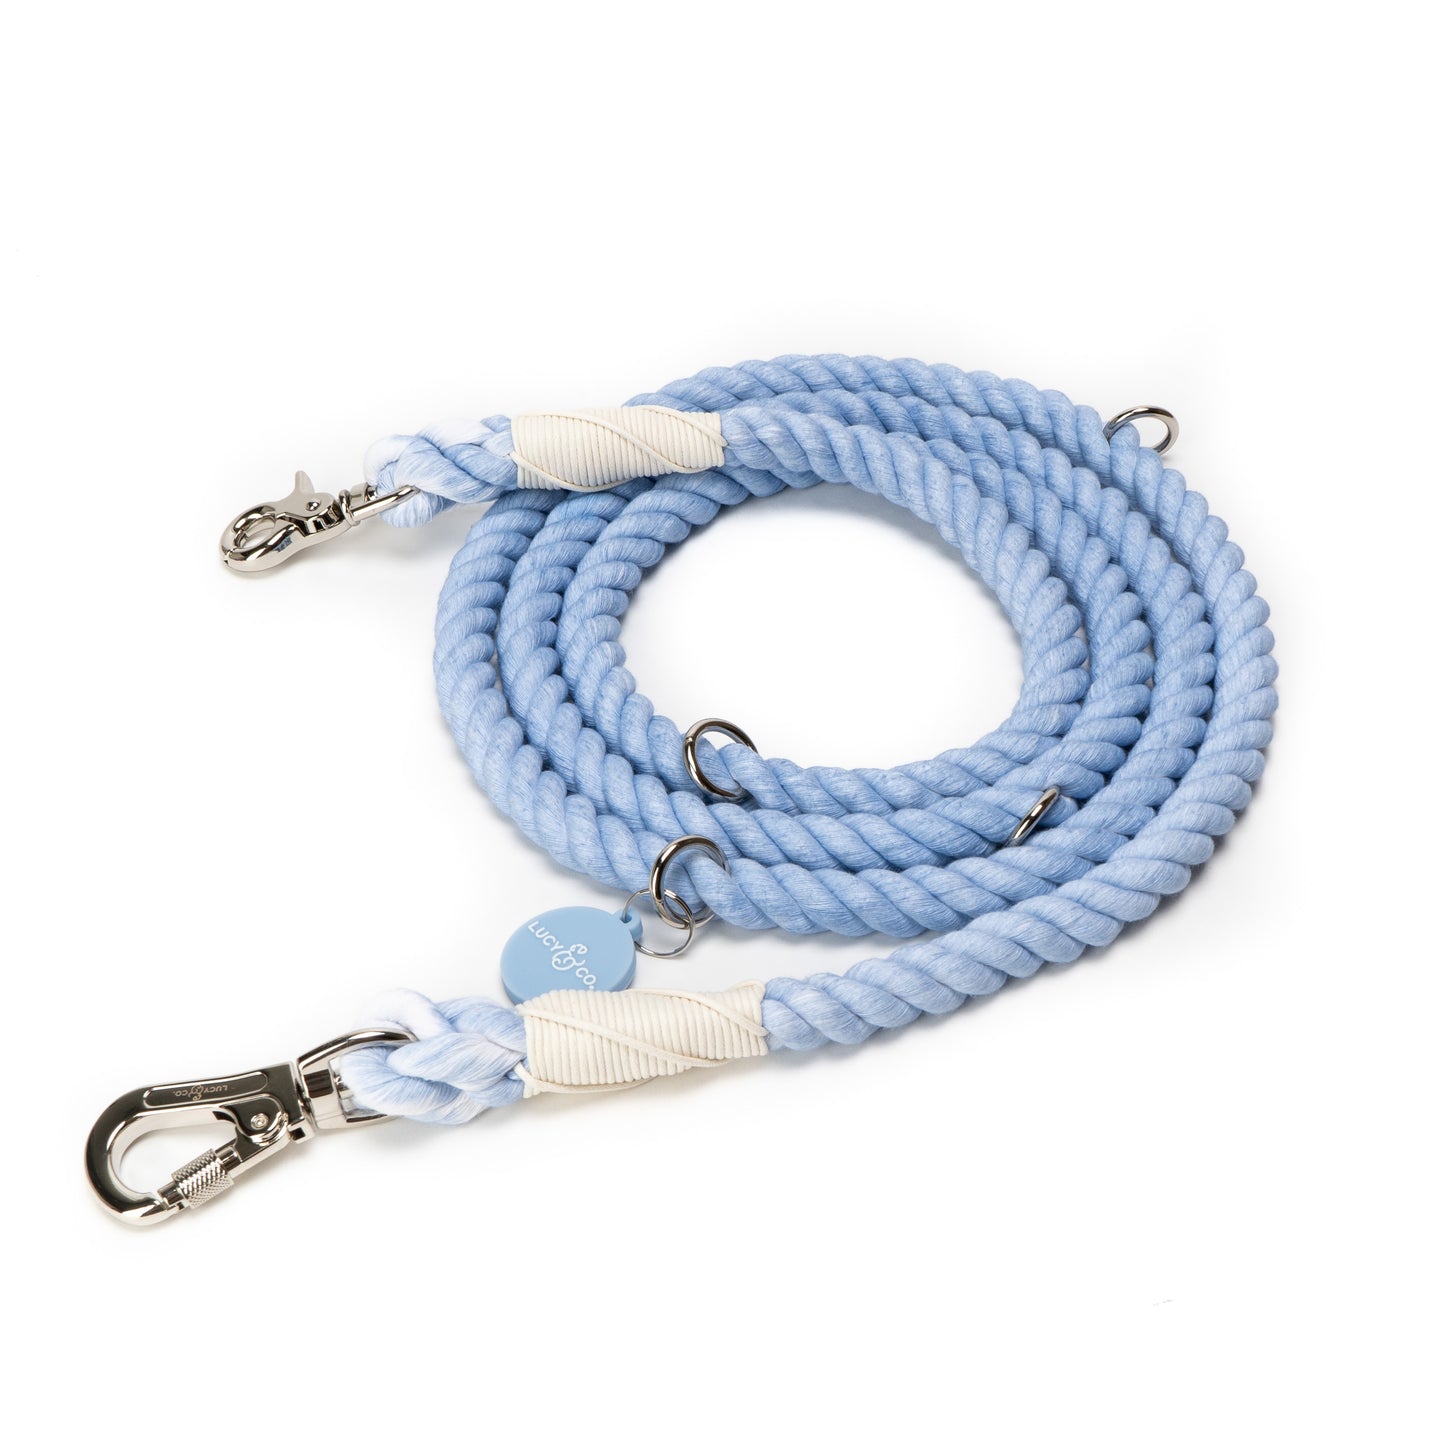 The Denim Blue Hands-Free Rope Leash